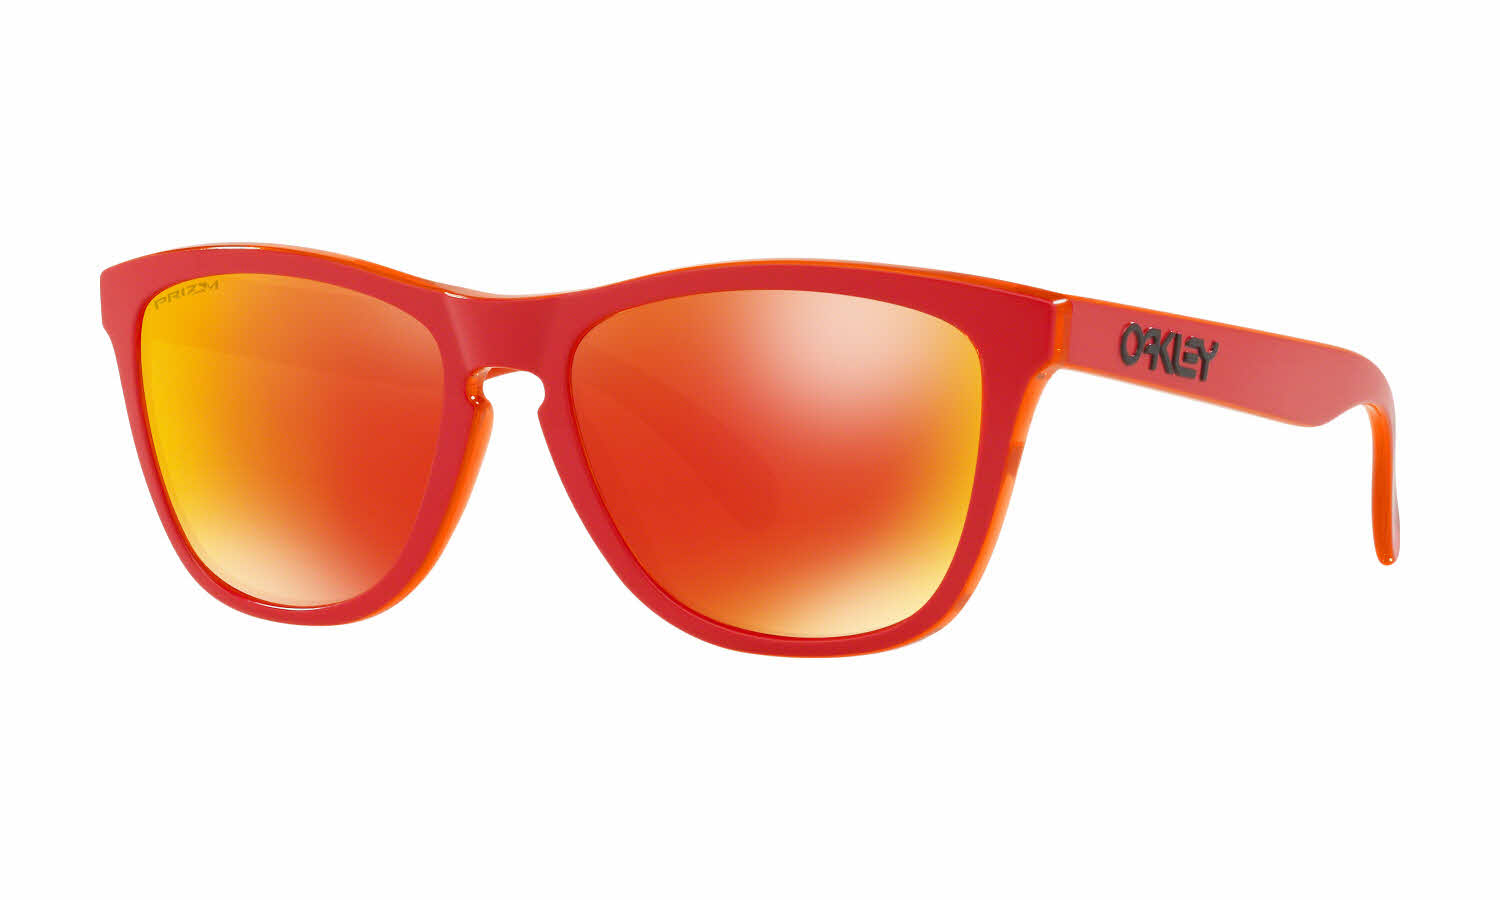 Oakley Frogskins - Alternate Fit Sunglasses